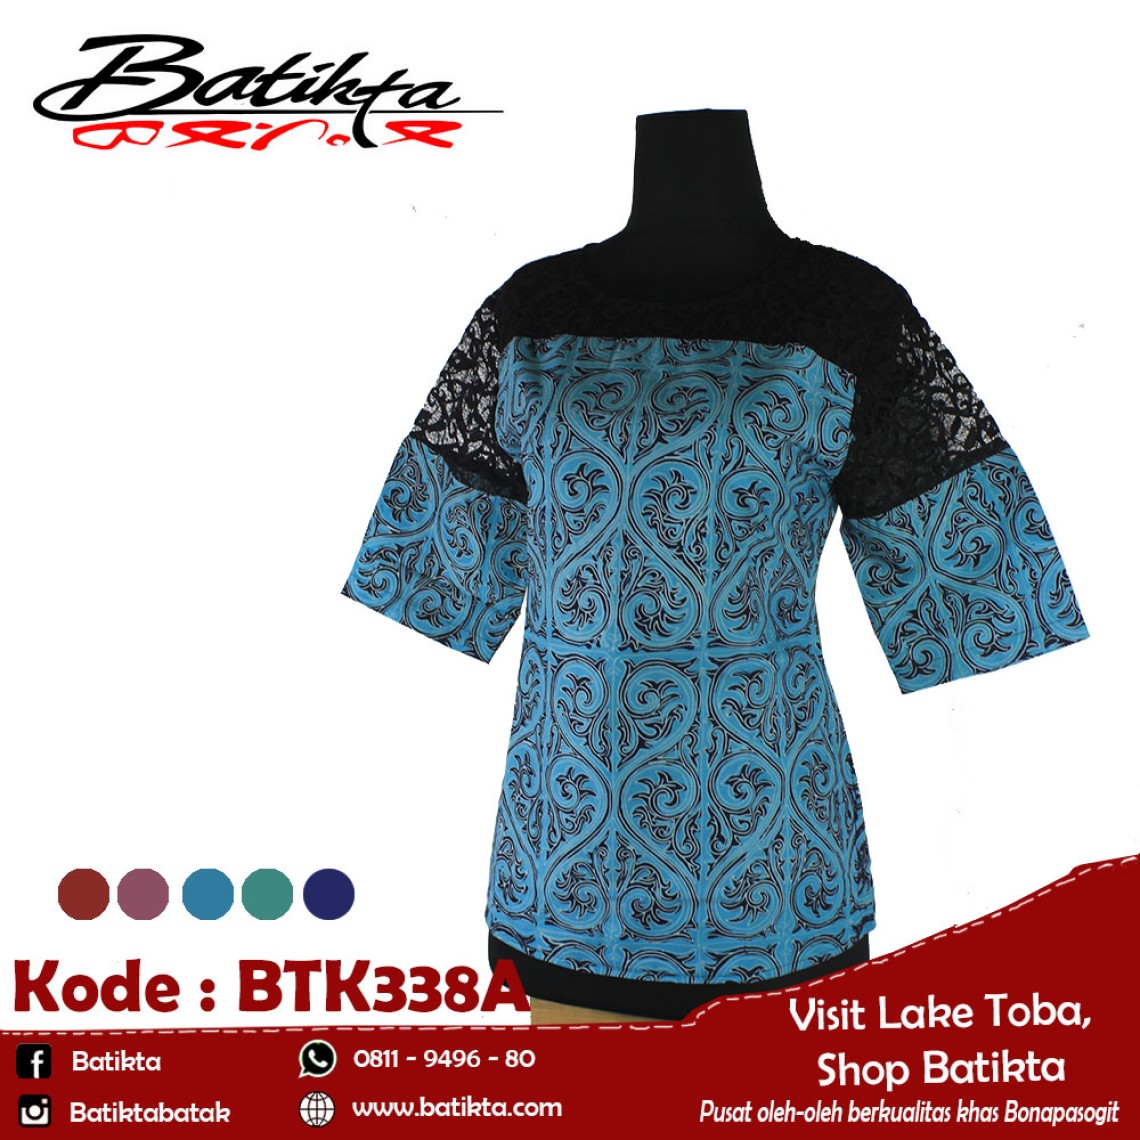 BTK338A Blus Batik Motif Gorga Warna Cyan Putih Hitam profile picture